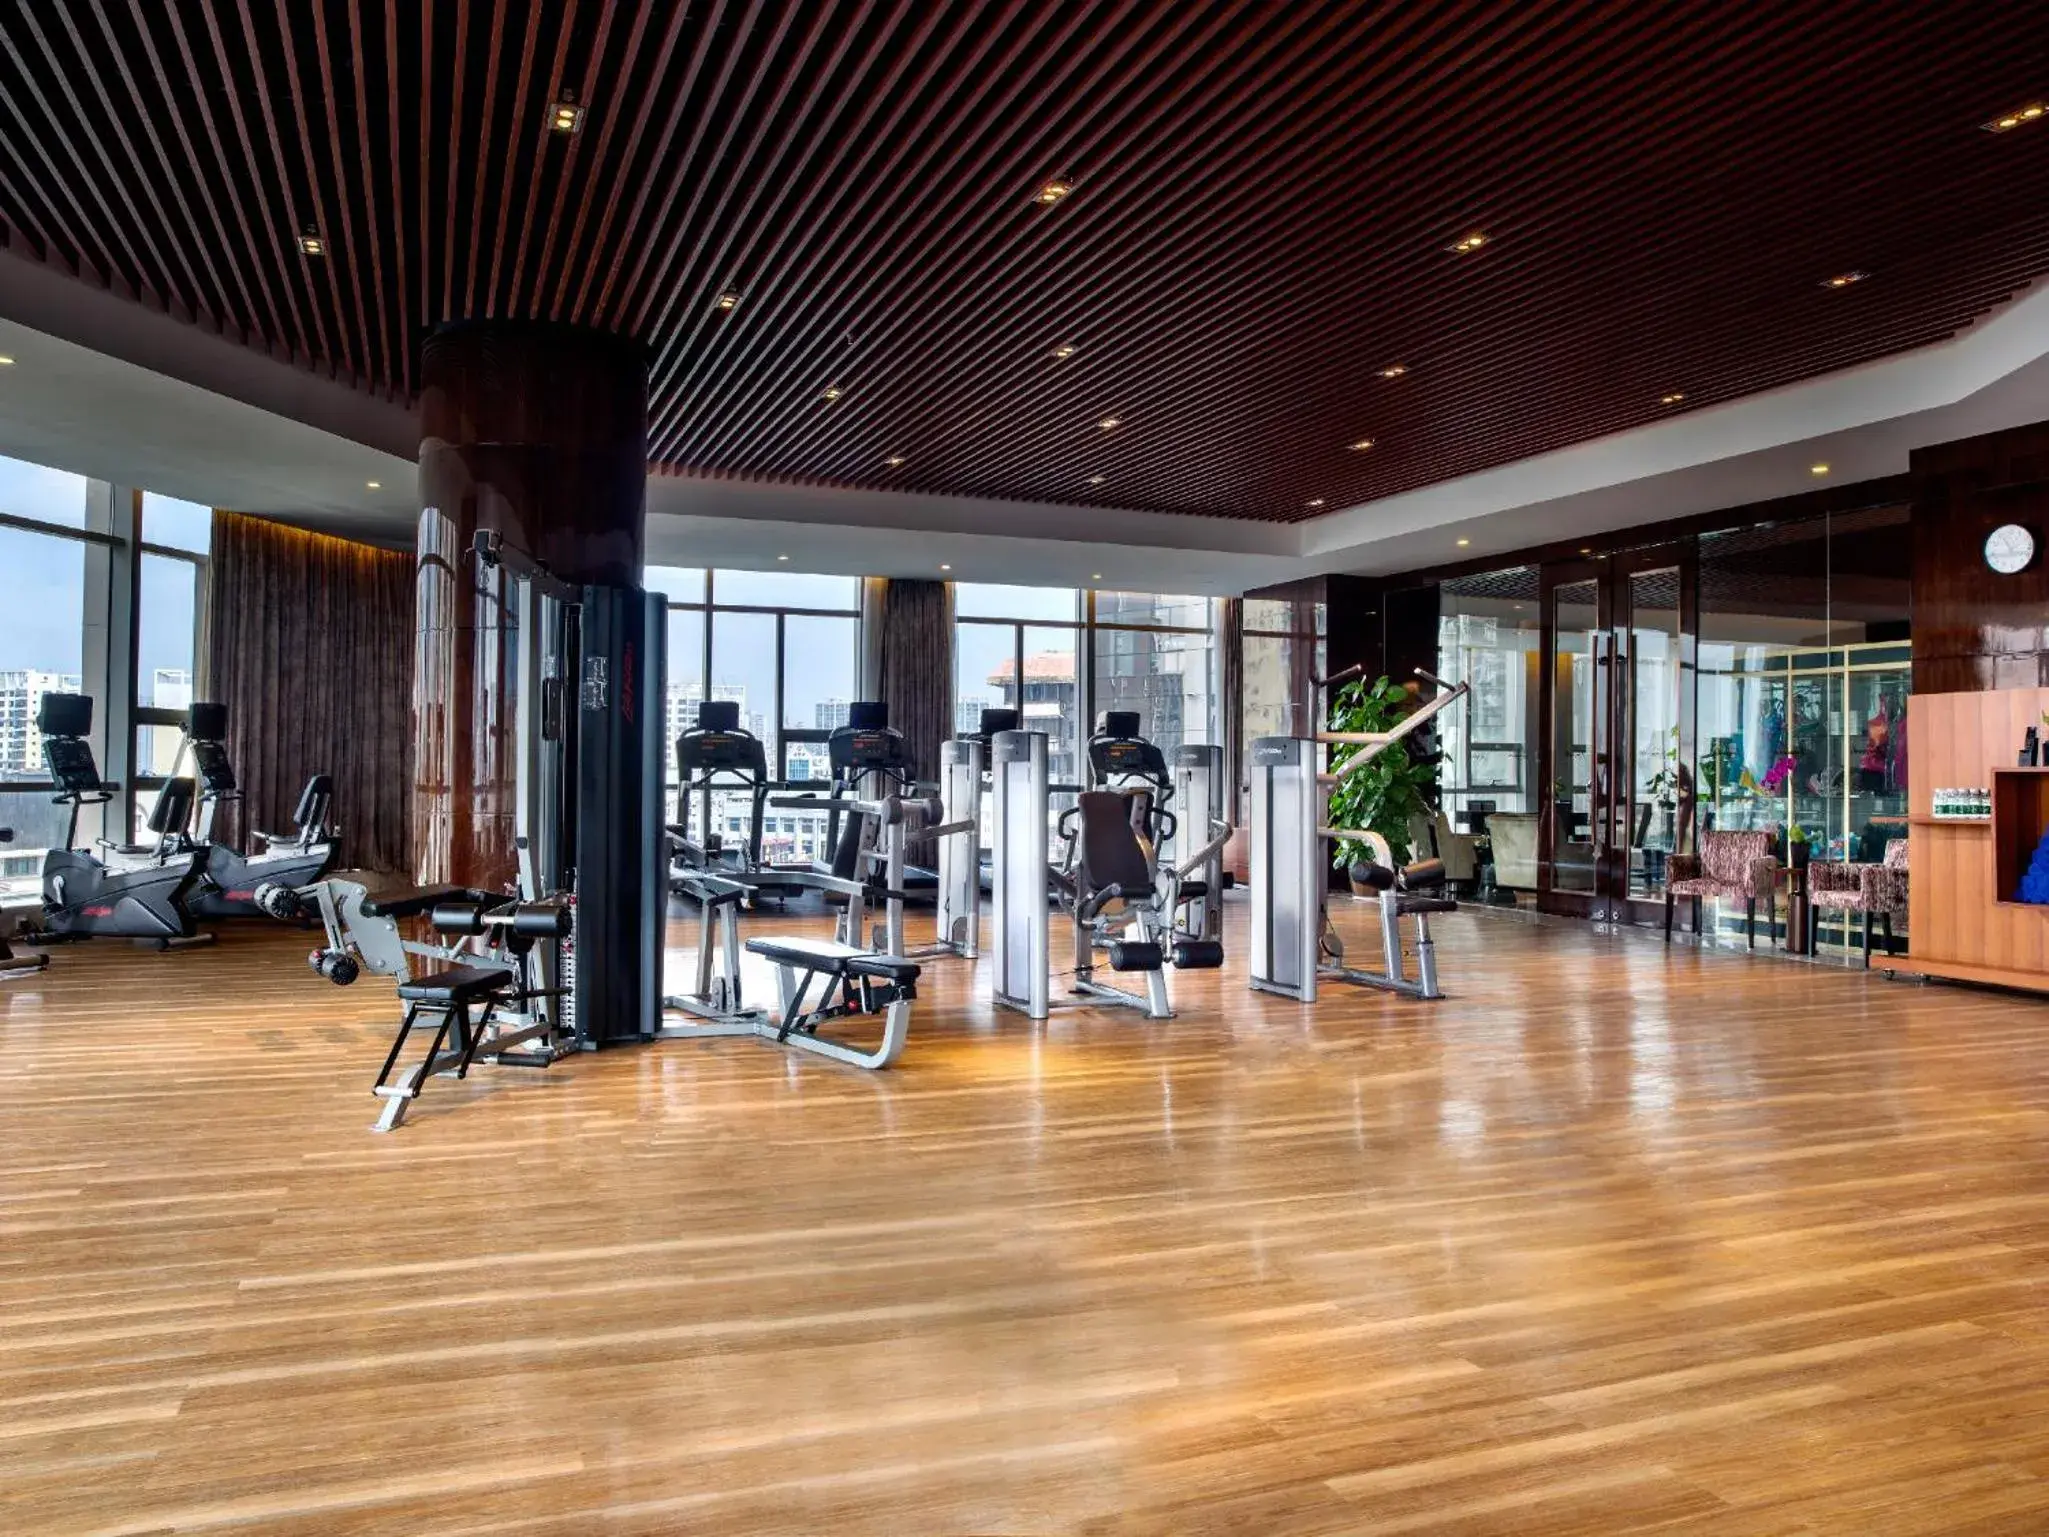 Fitness centre/facilities, Fitness Center/Facilities in Kempinski Hotel Changsha